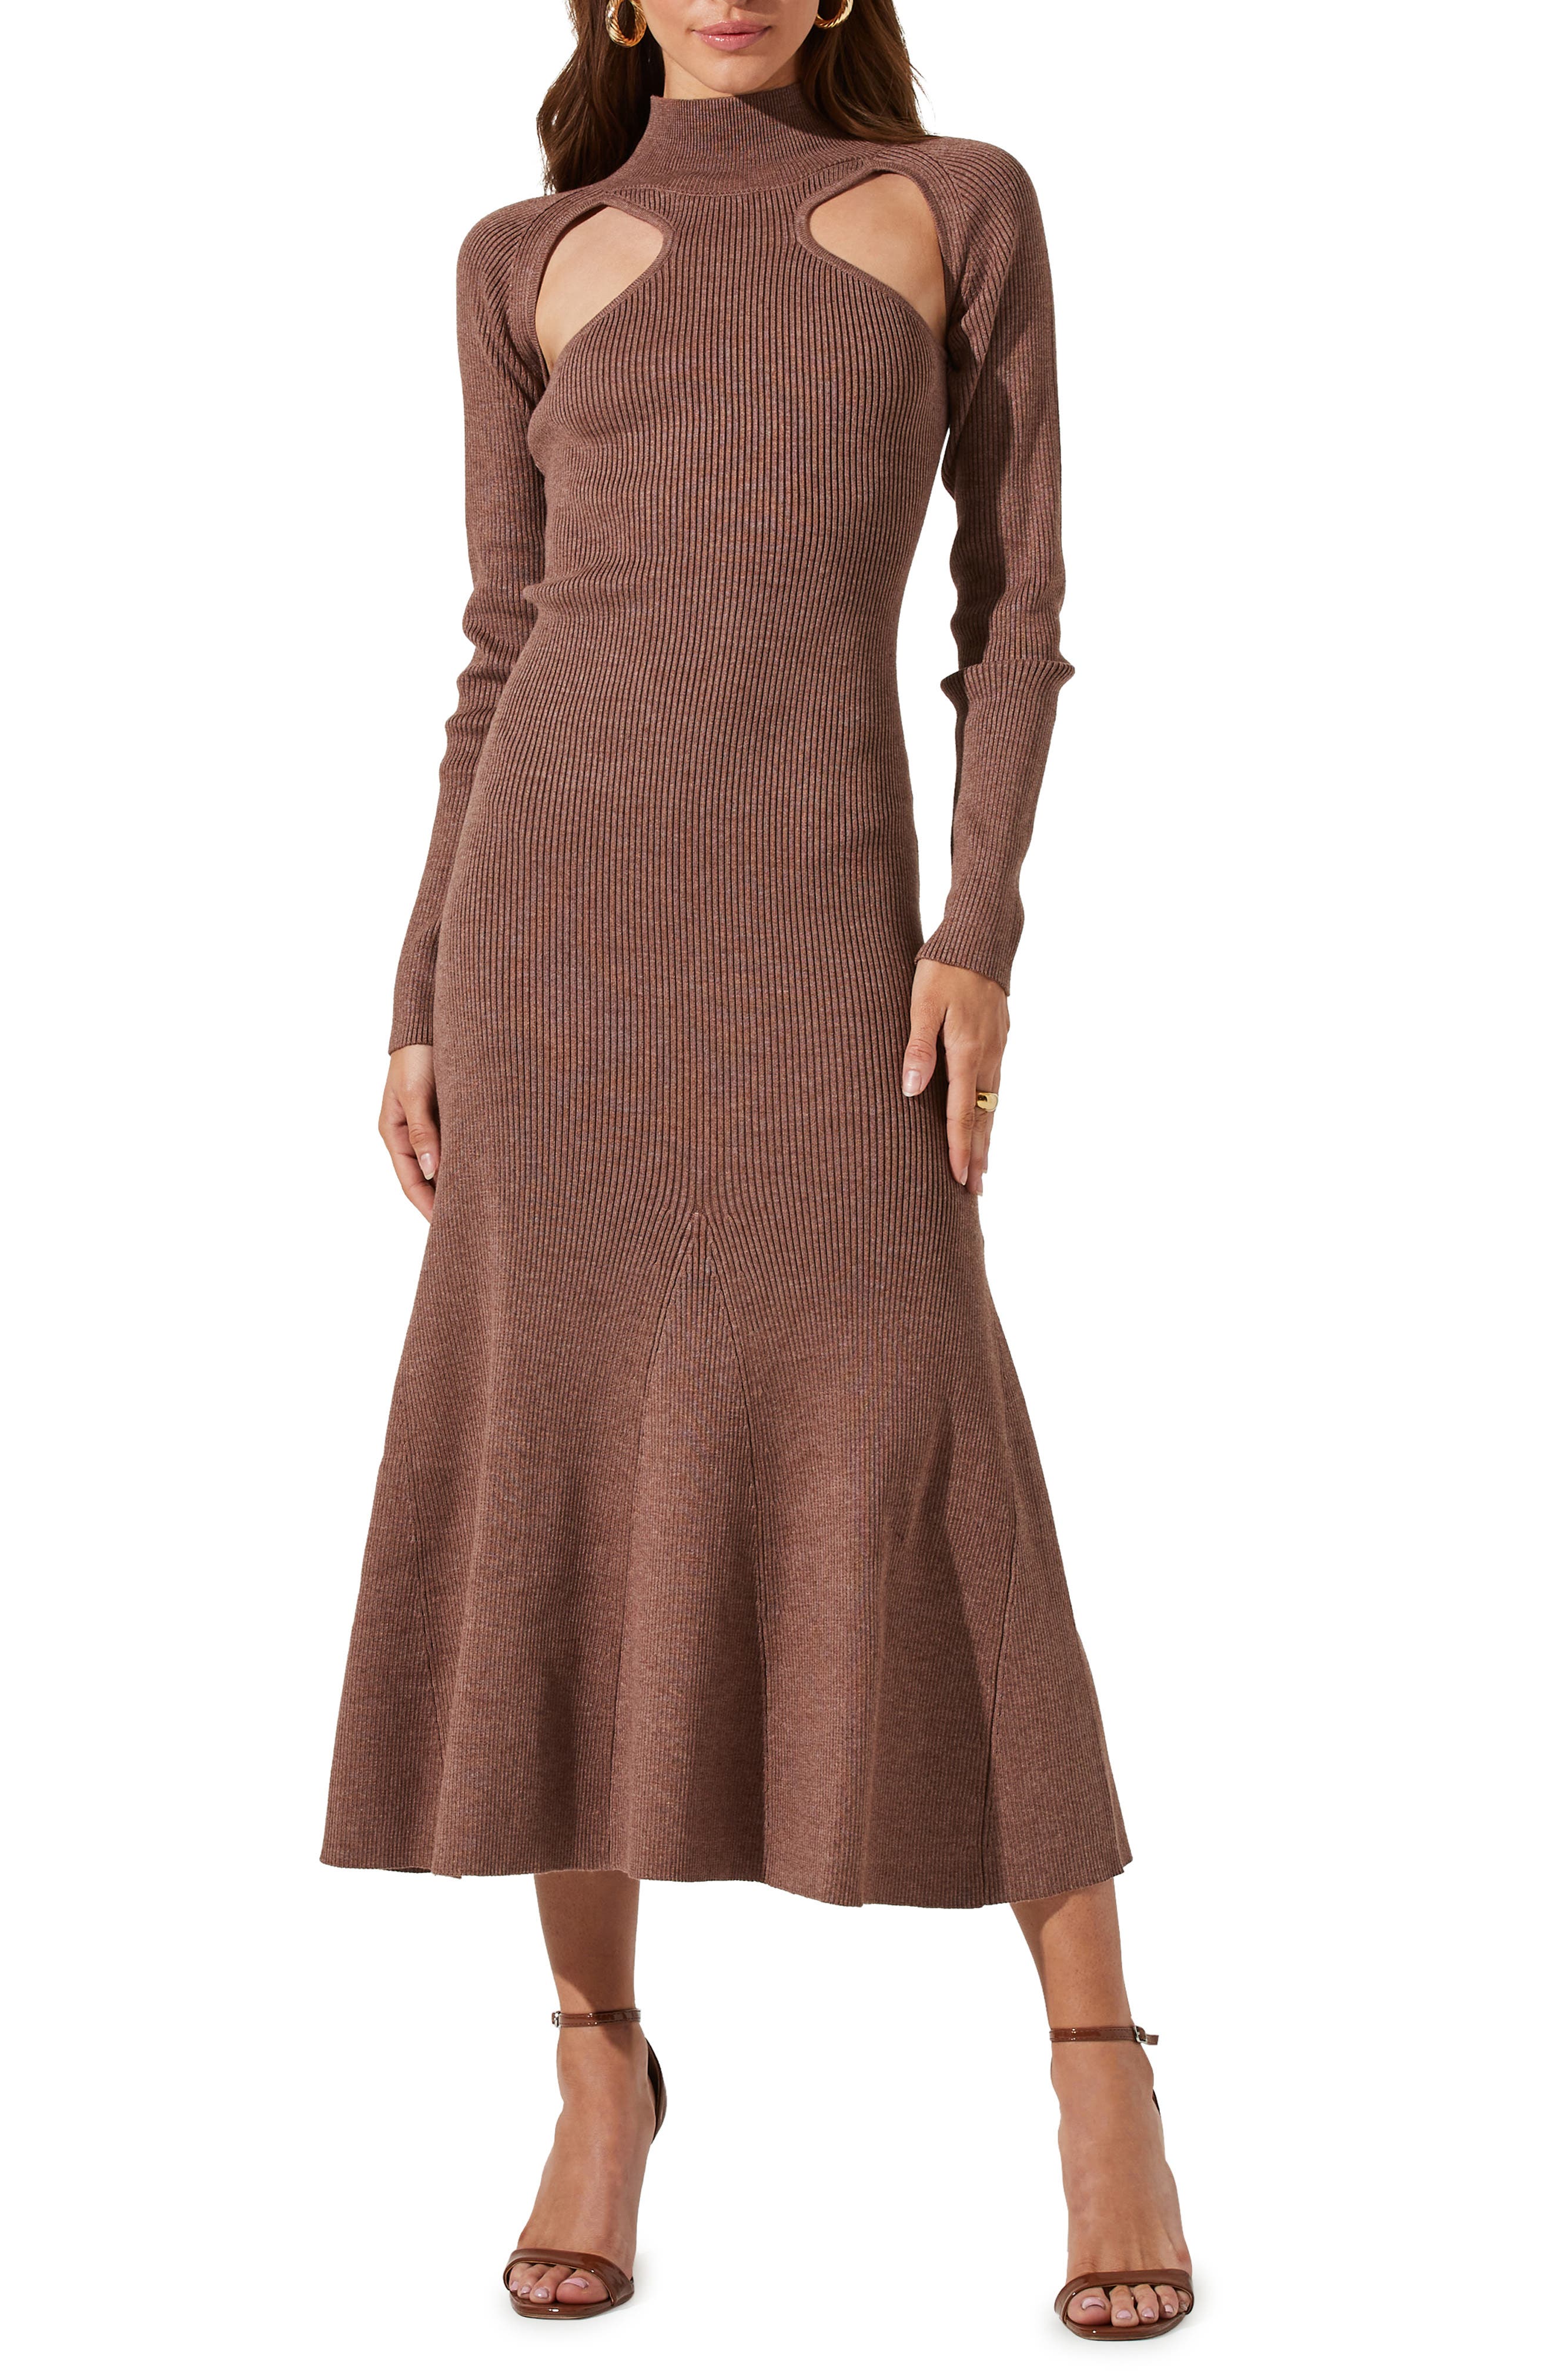 Sweaters Dresses Knitted Cotton Long Sleeve Elegant Design Women Fashion Dress